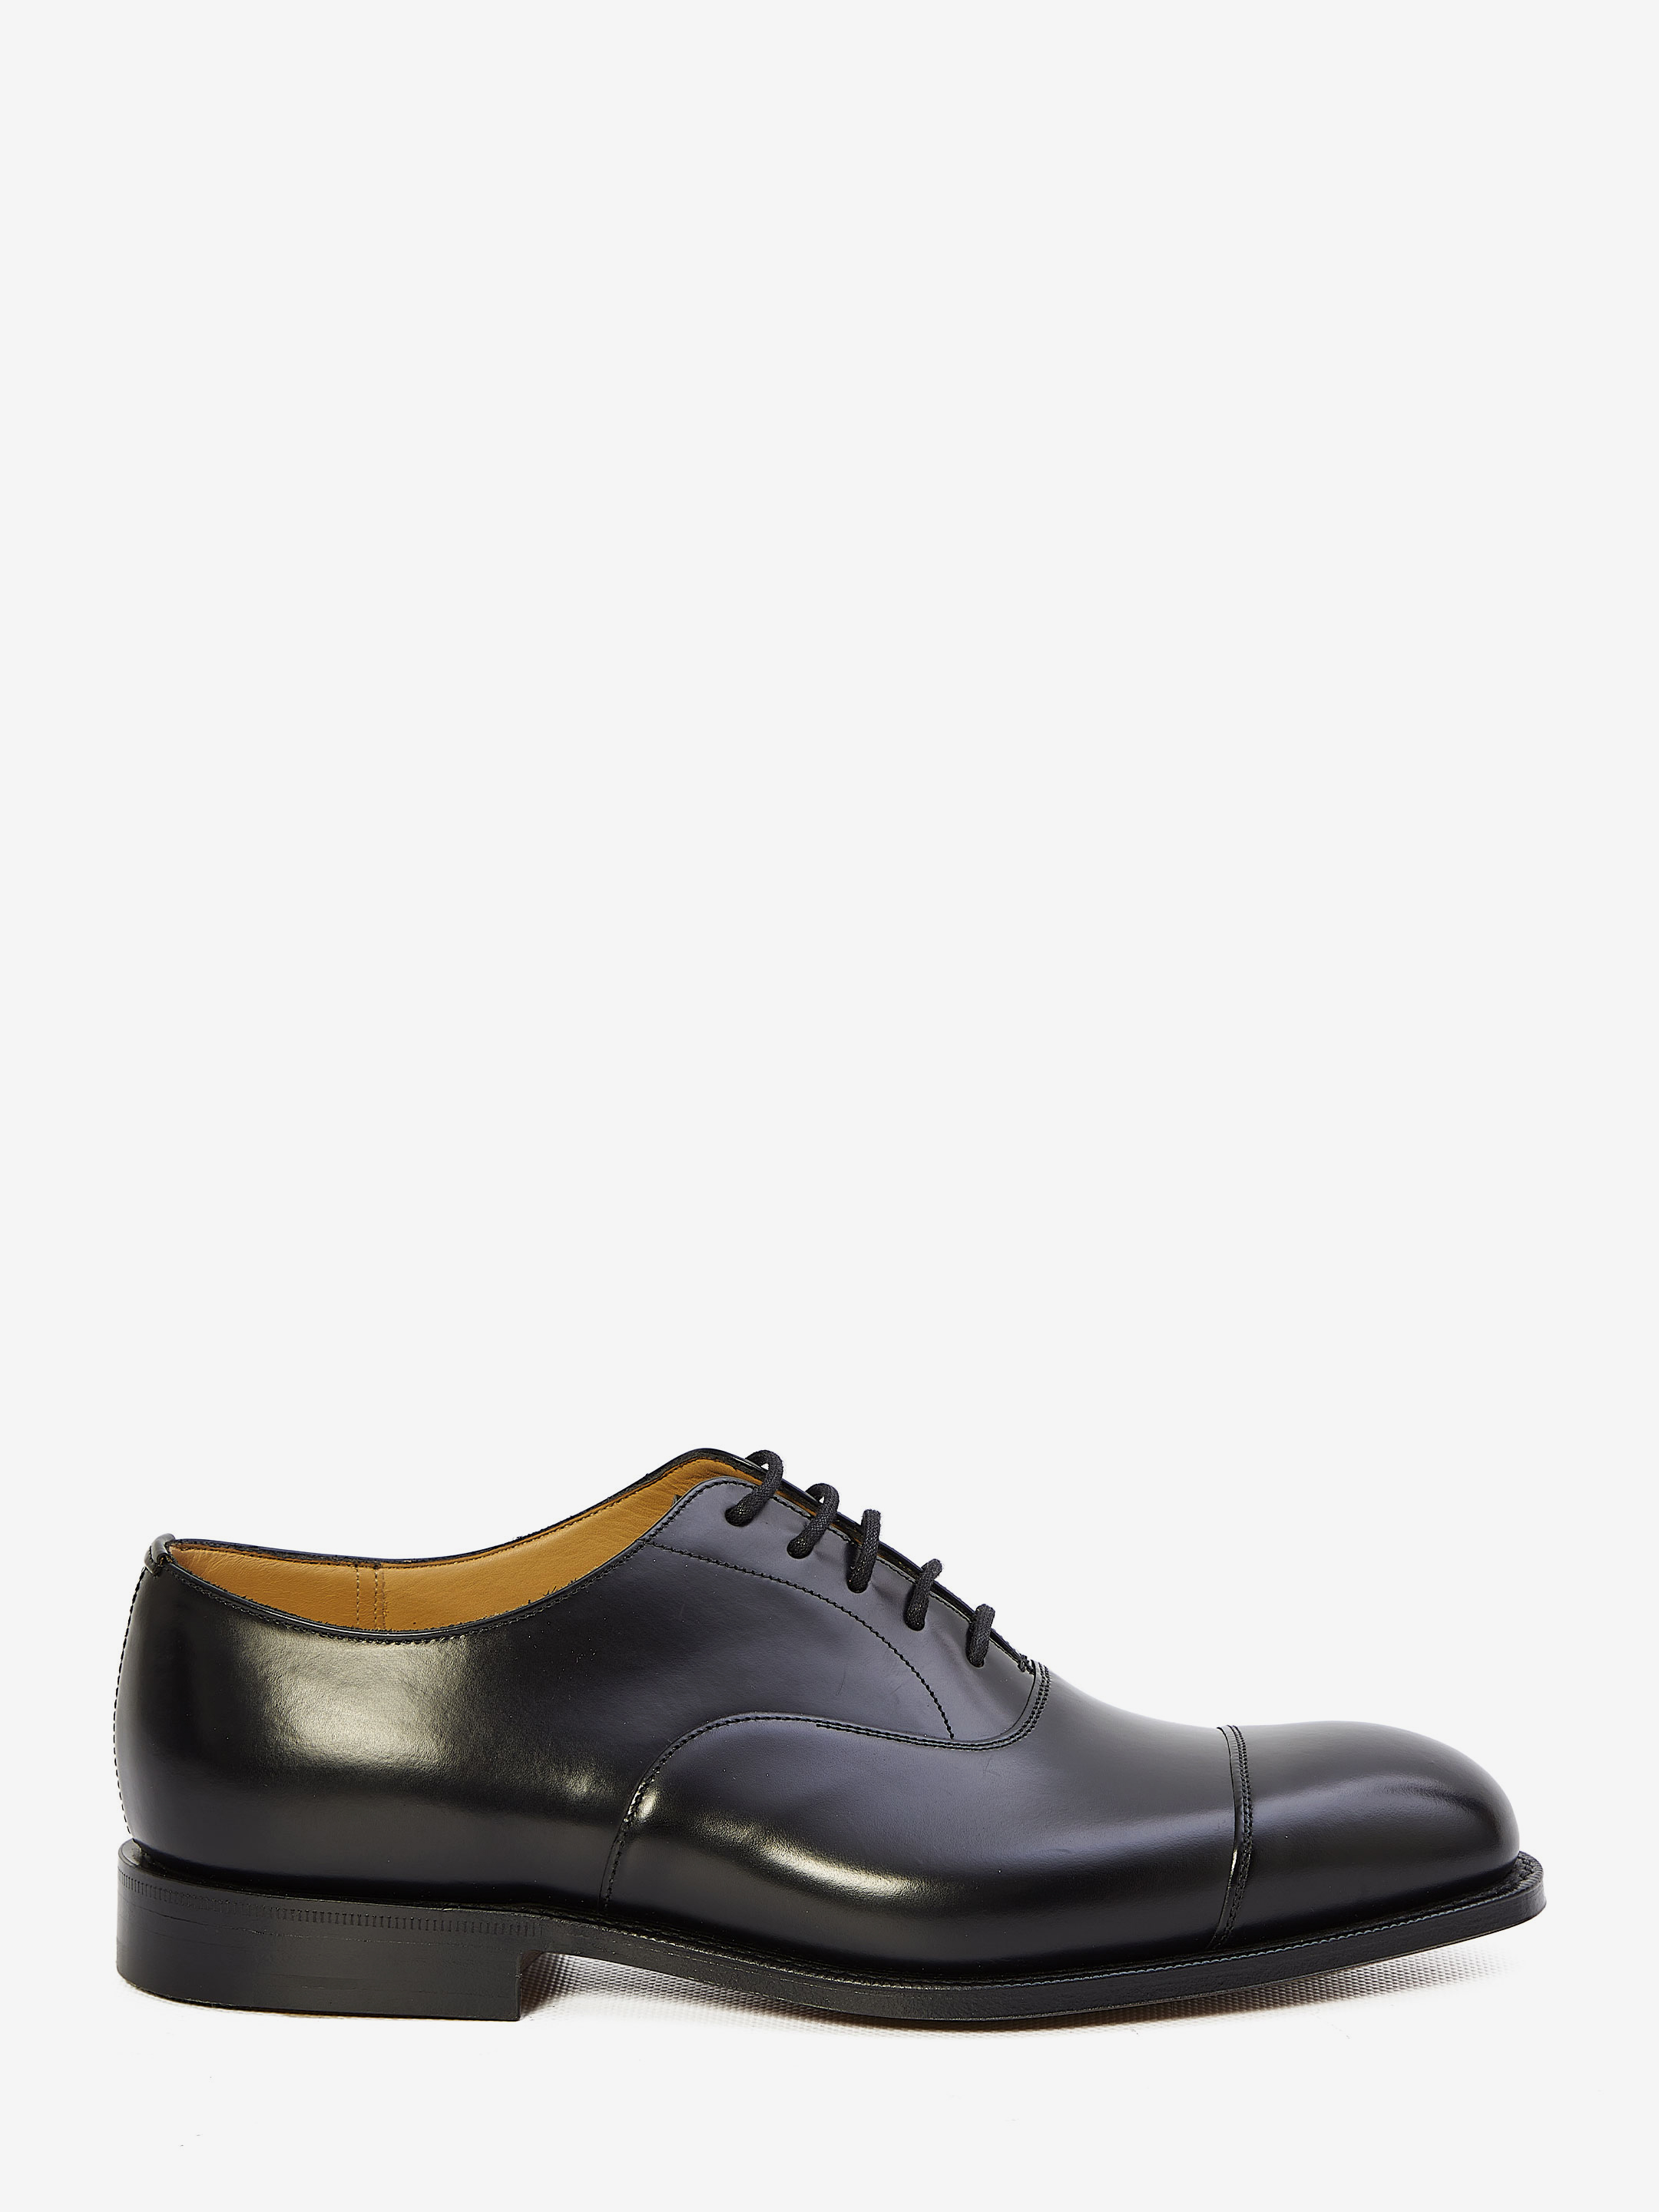 CHURCH'S - Consul 173 Oxford shoes | Leam Roma - Luxury Shopping 